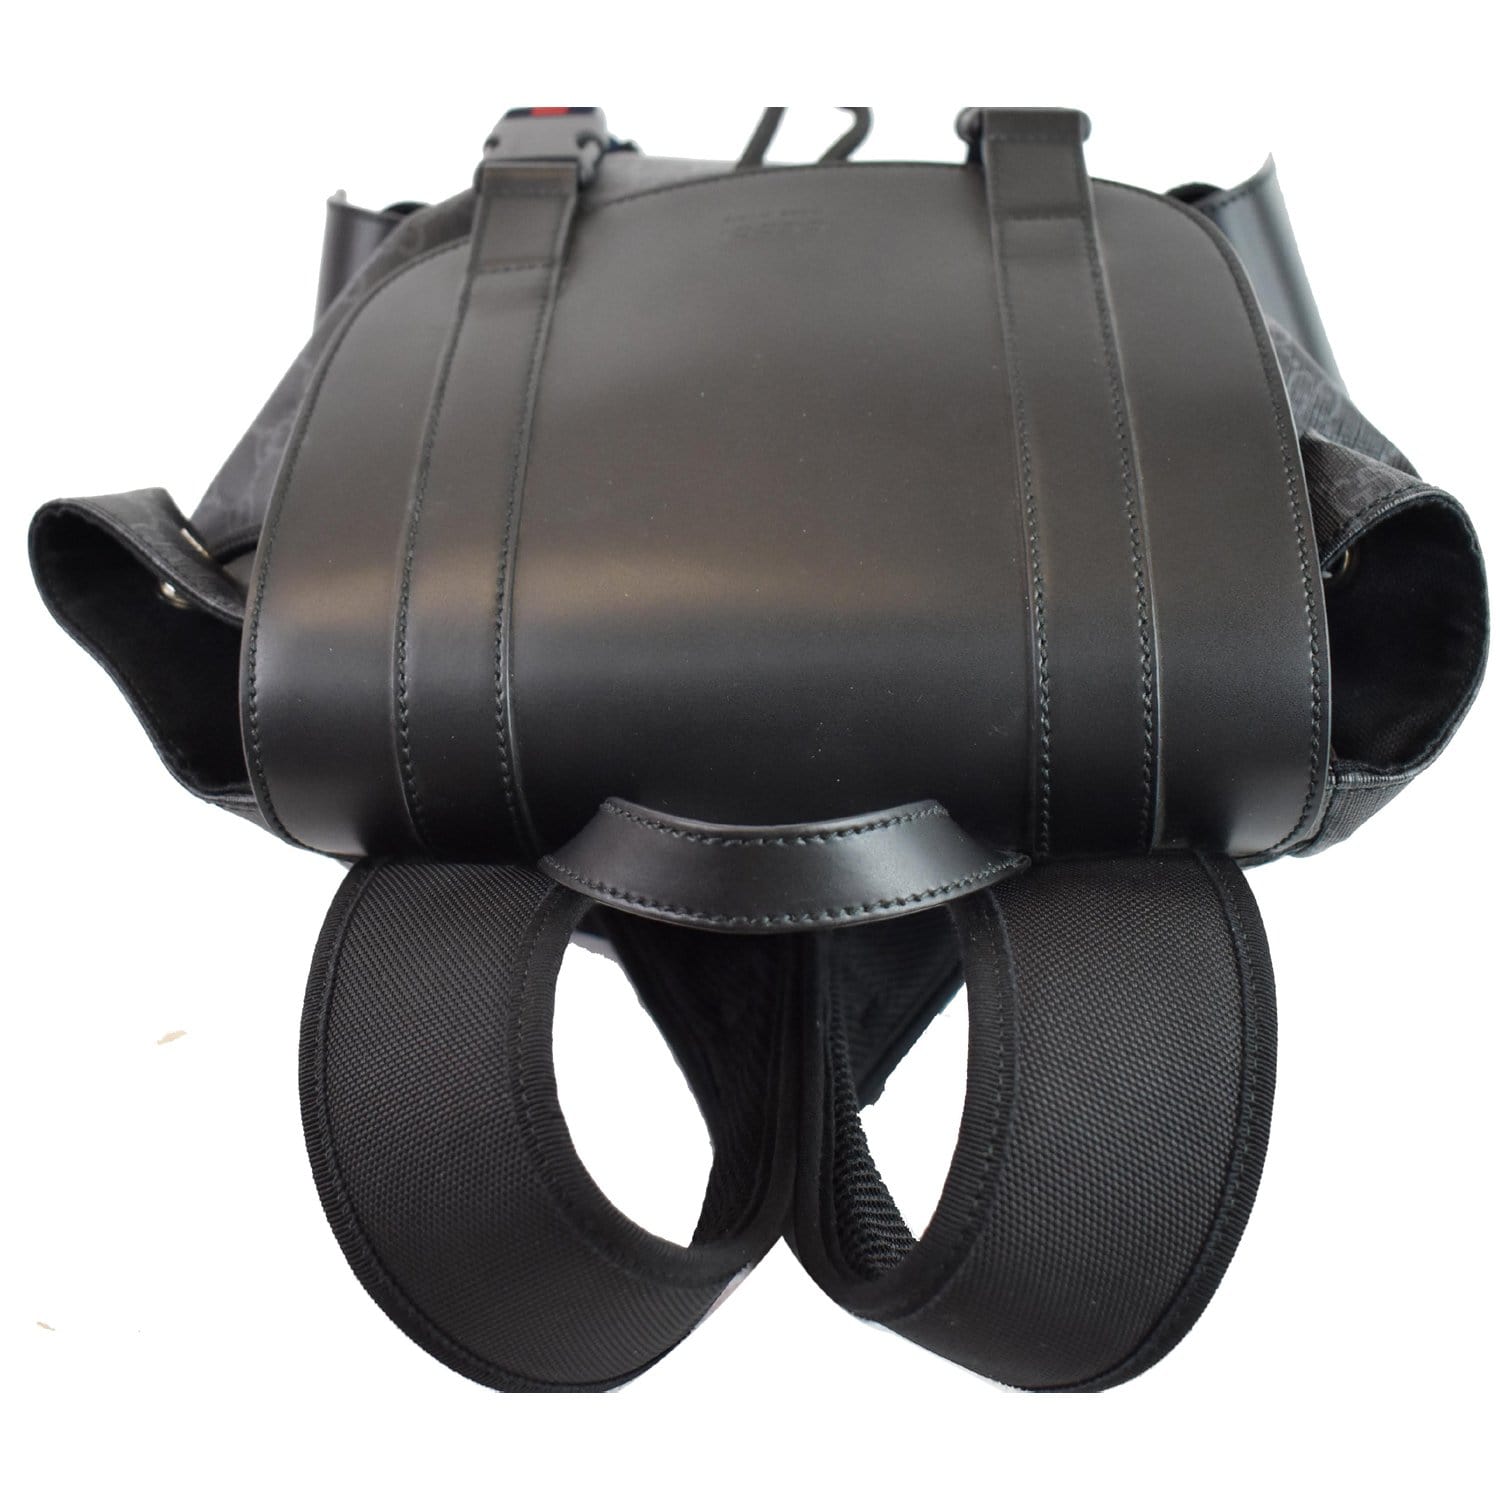 Gucci GG Supreme Leather Microfiber Backpack Bag Black